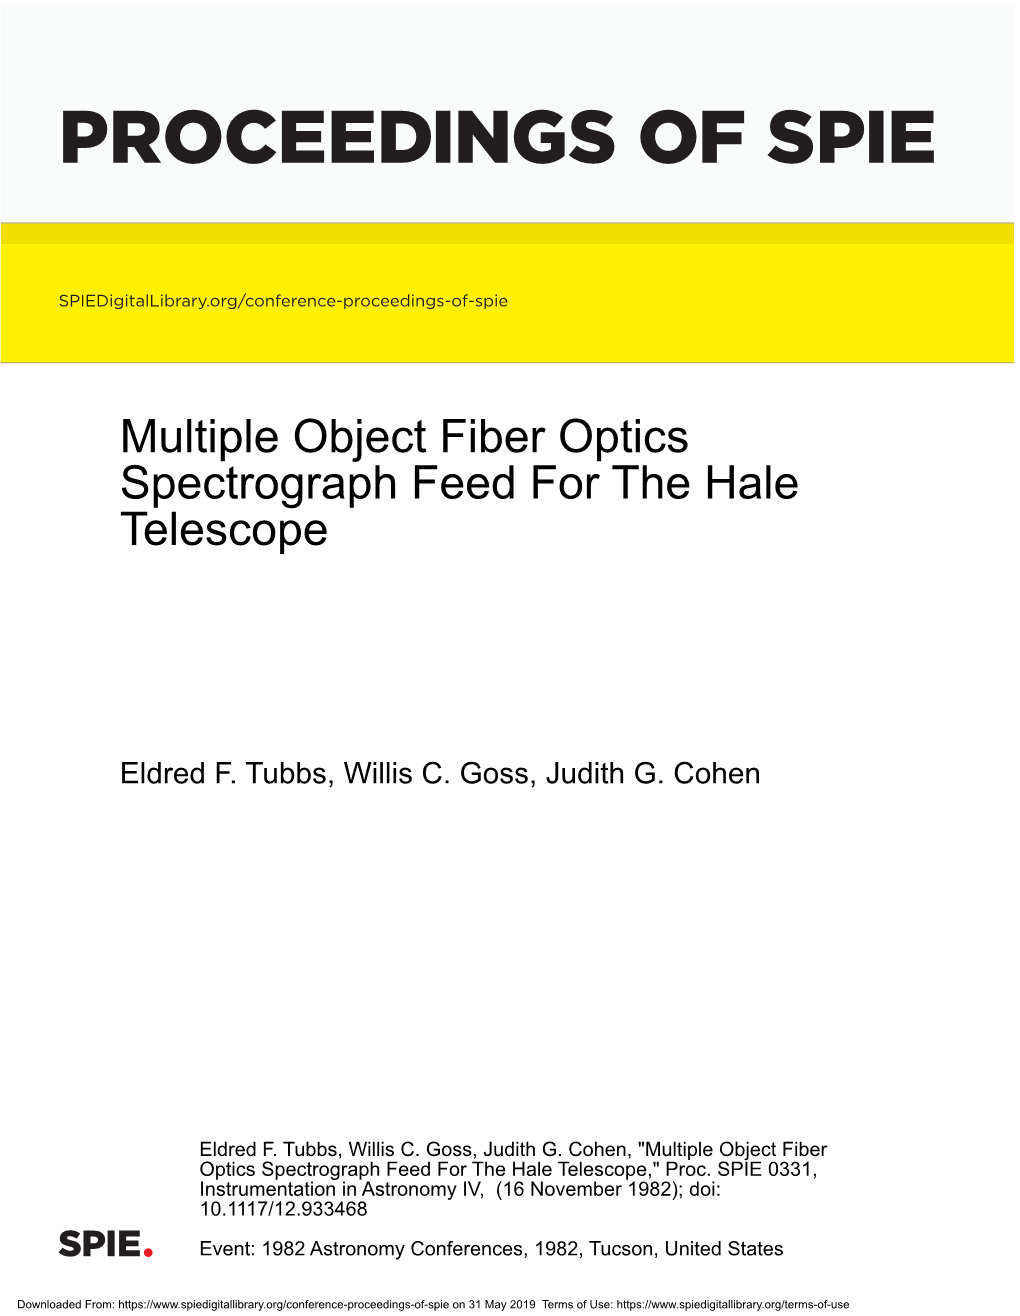 Multiple Object Fiber Optics Spectrograph Feed for the Hale Telescope